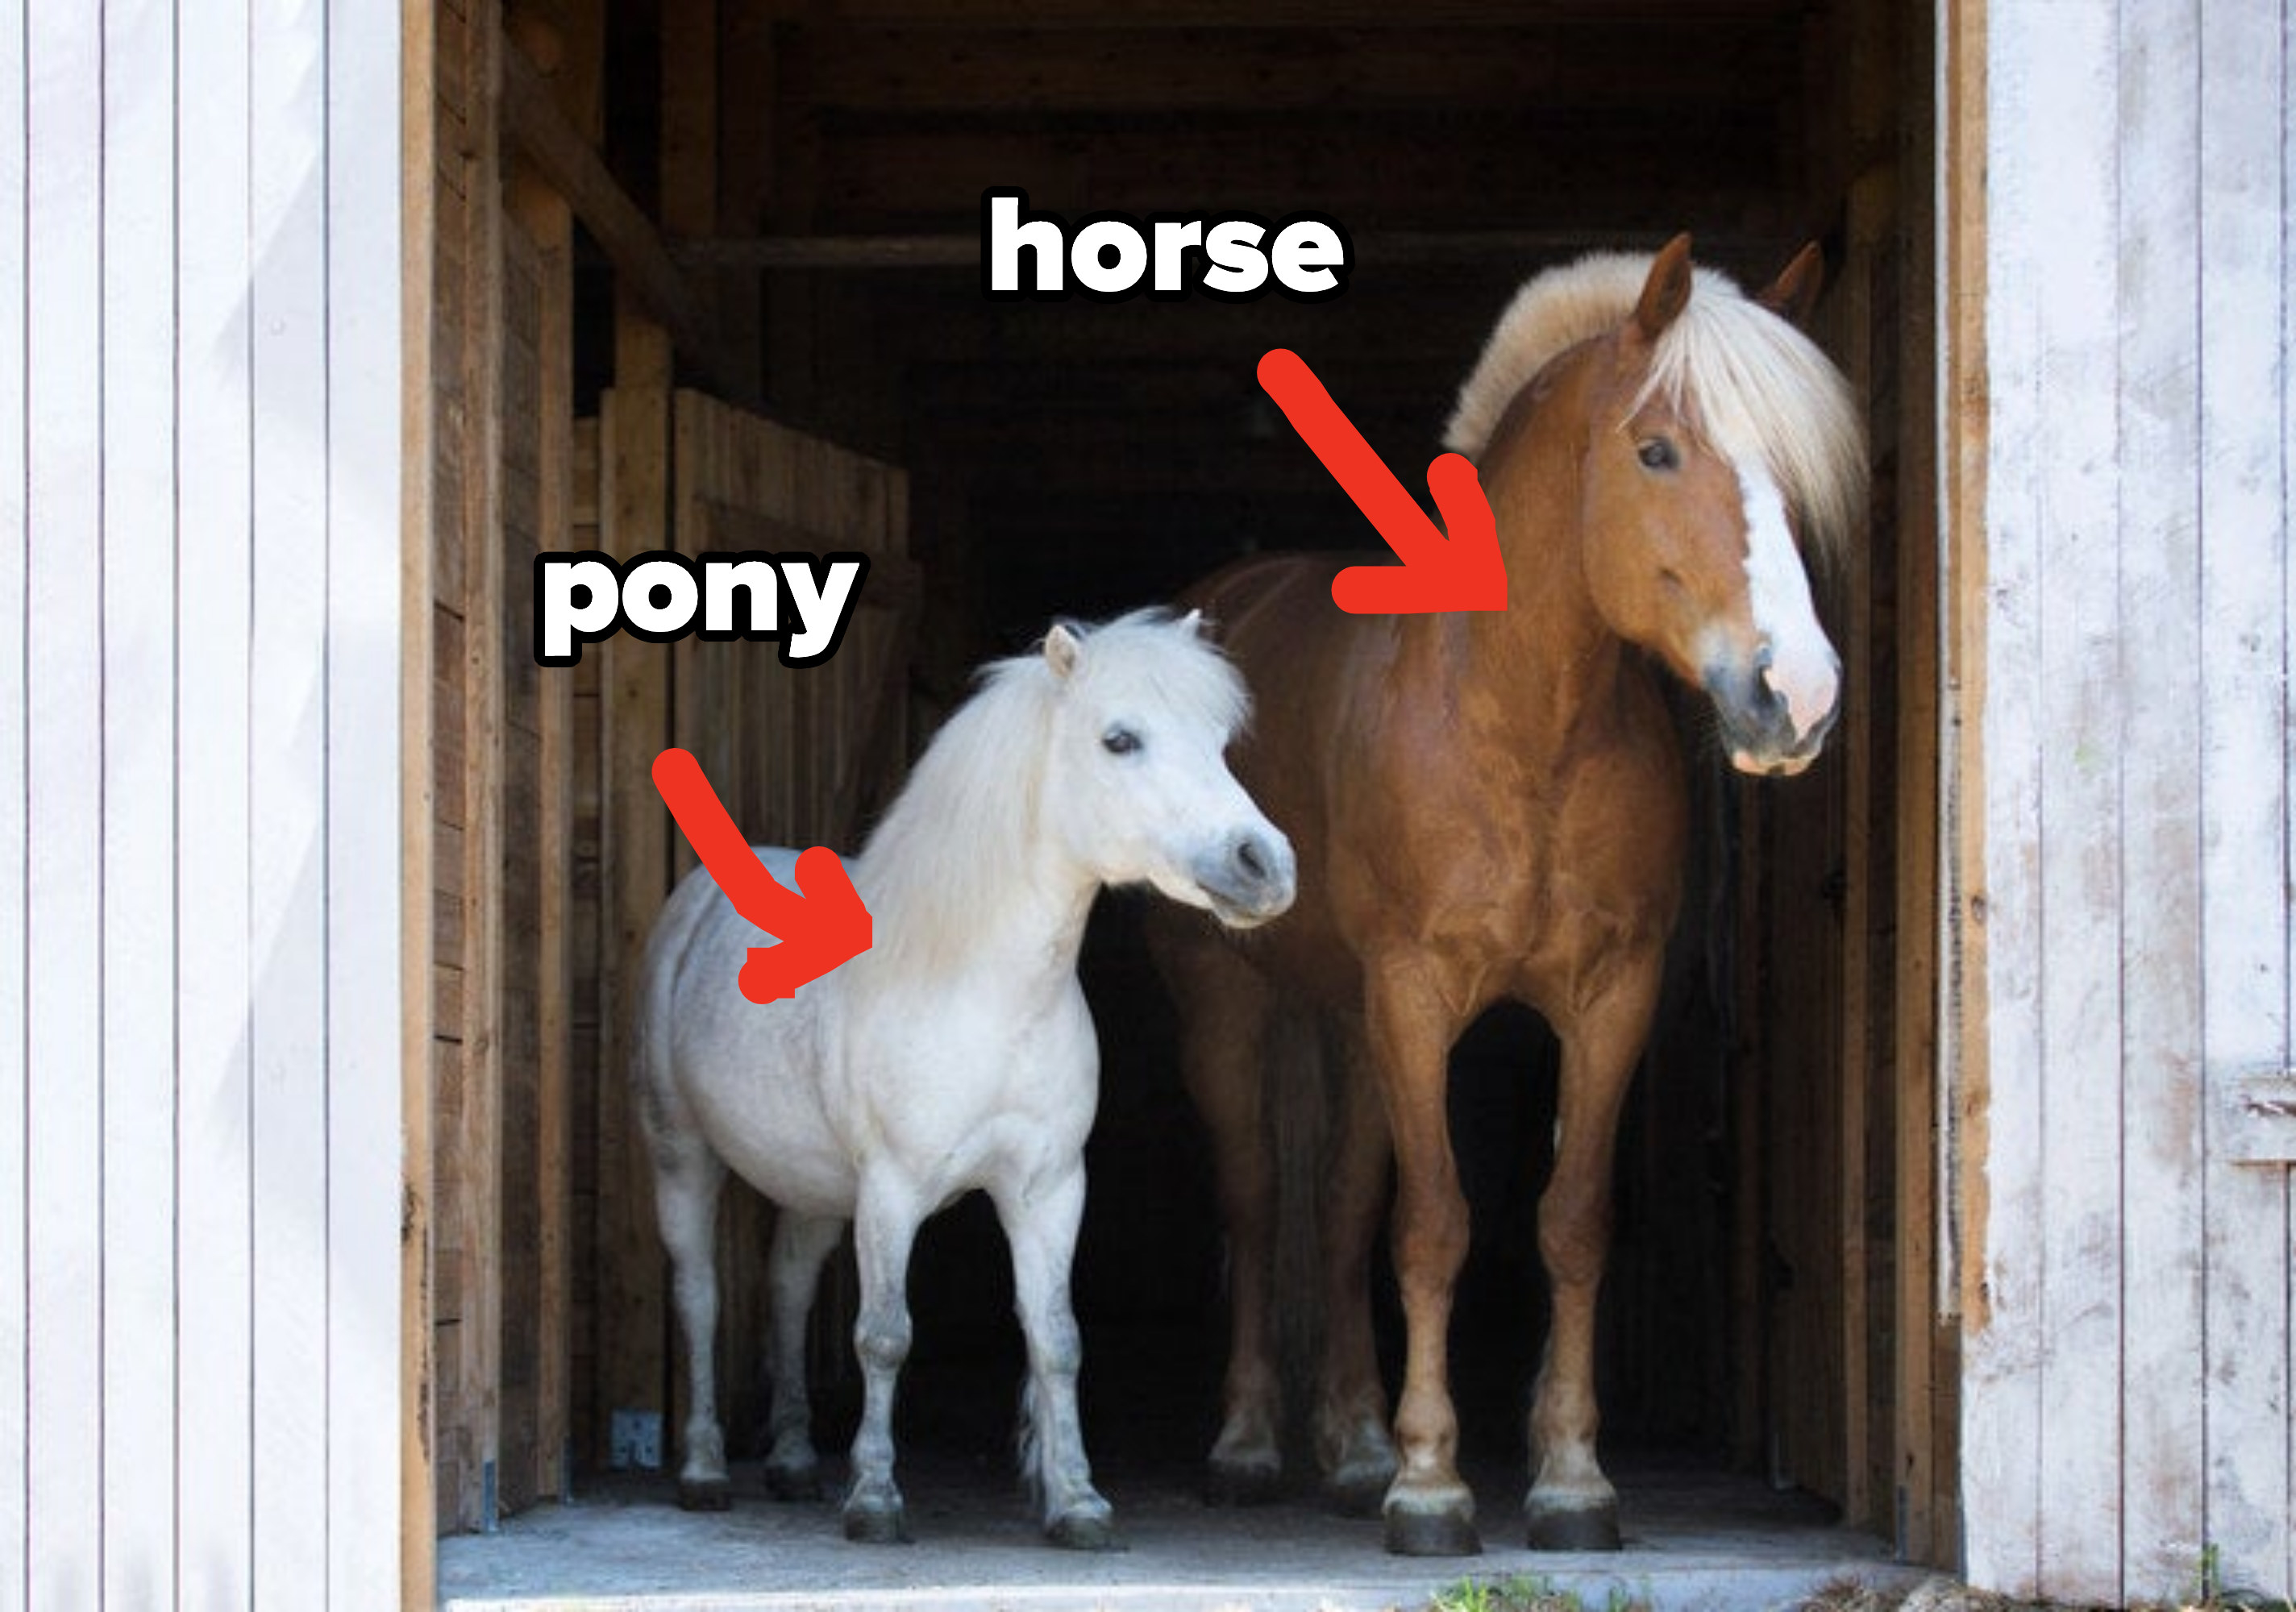 a pony and horse inside a barn